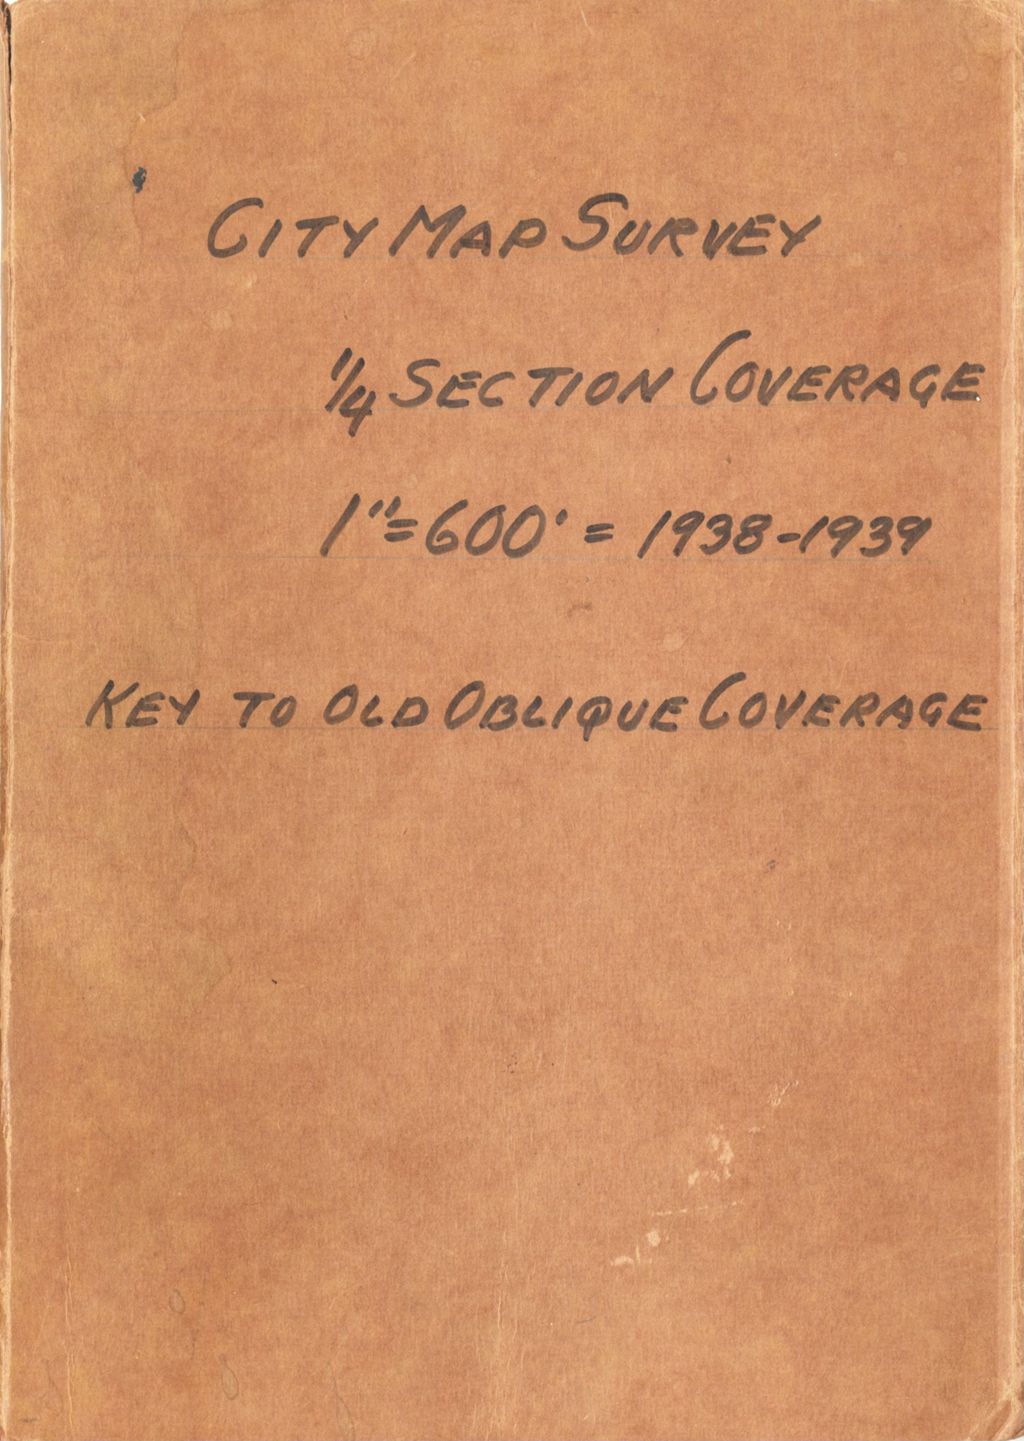 City map survey, key to old oblique coverage, copy 1